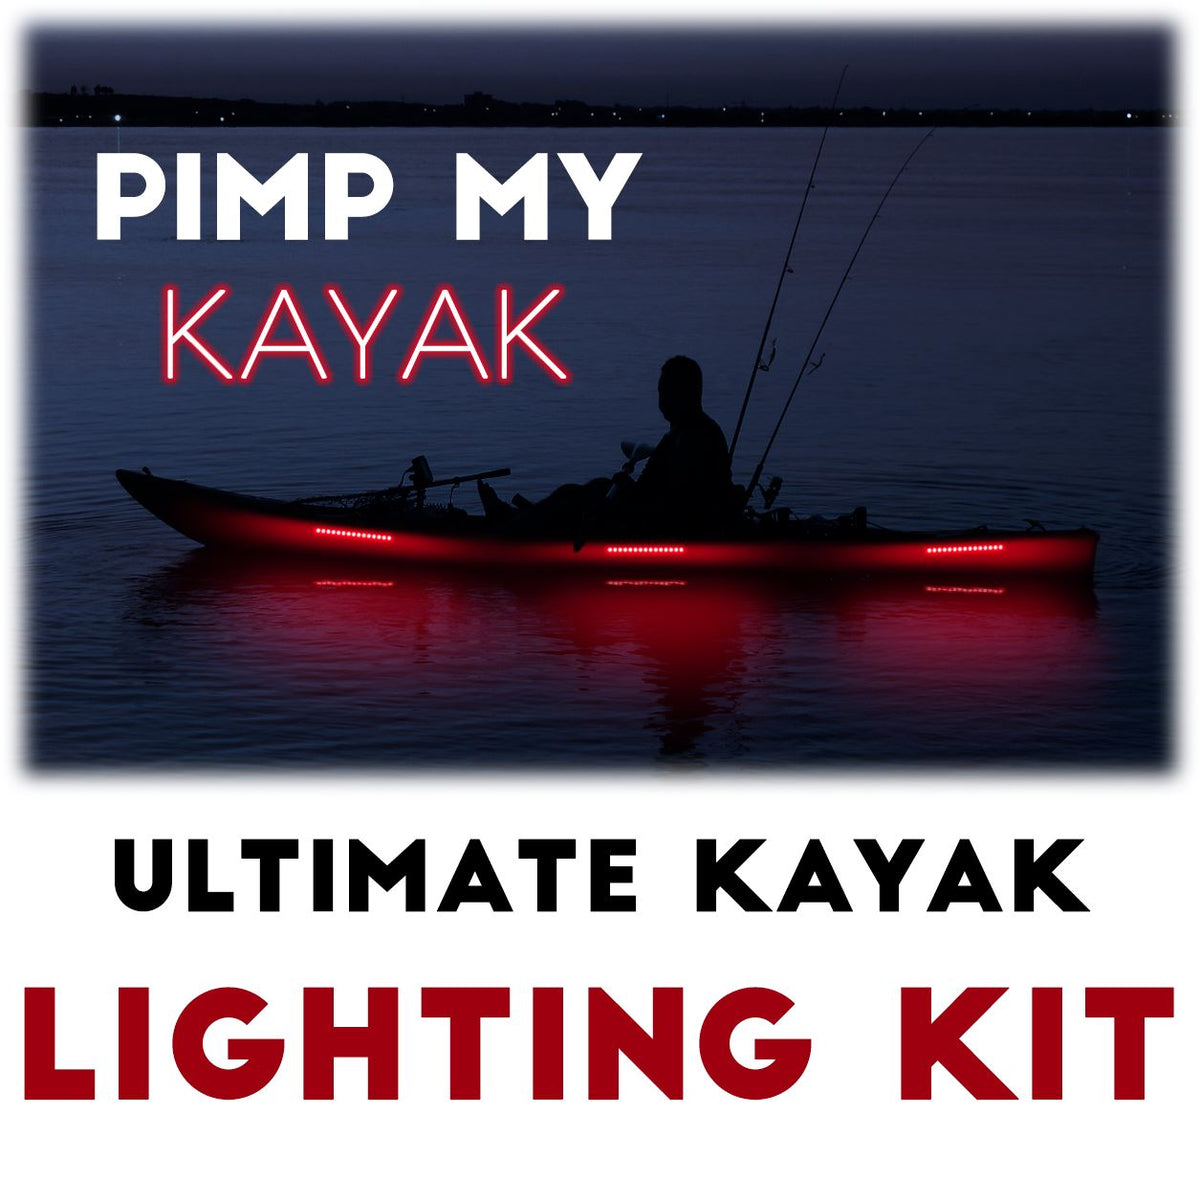 Pimp my Kayak - Red LED Lighting DIY Kit - 30,000 Lumens- Includes Red &amp; Green Navigation Lights Pimp my Kayak Green Blob Outdoors 